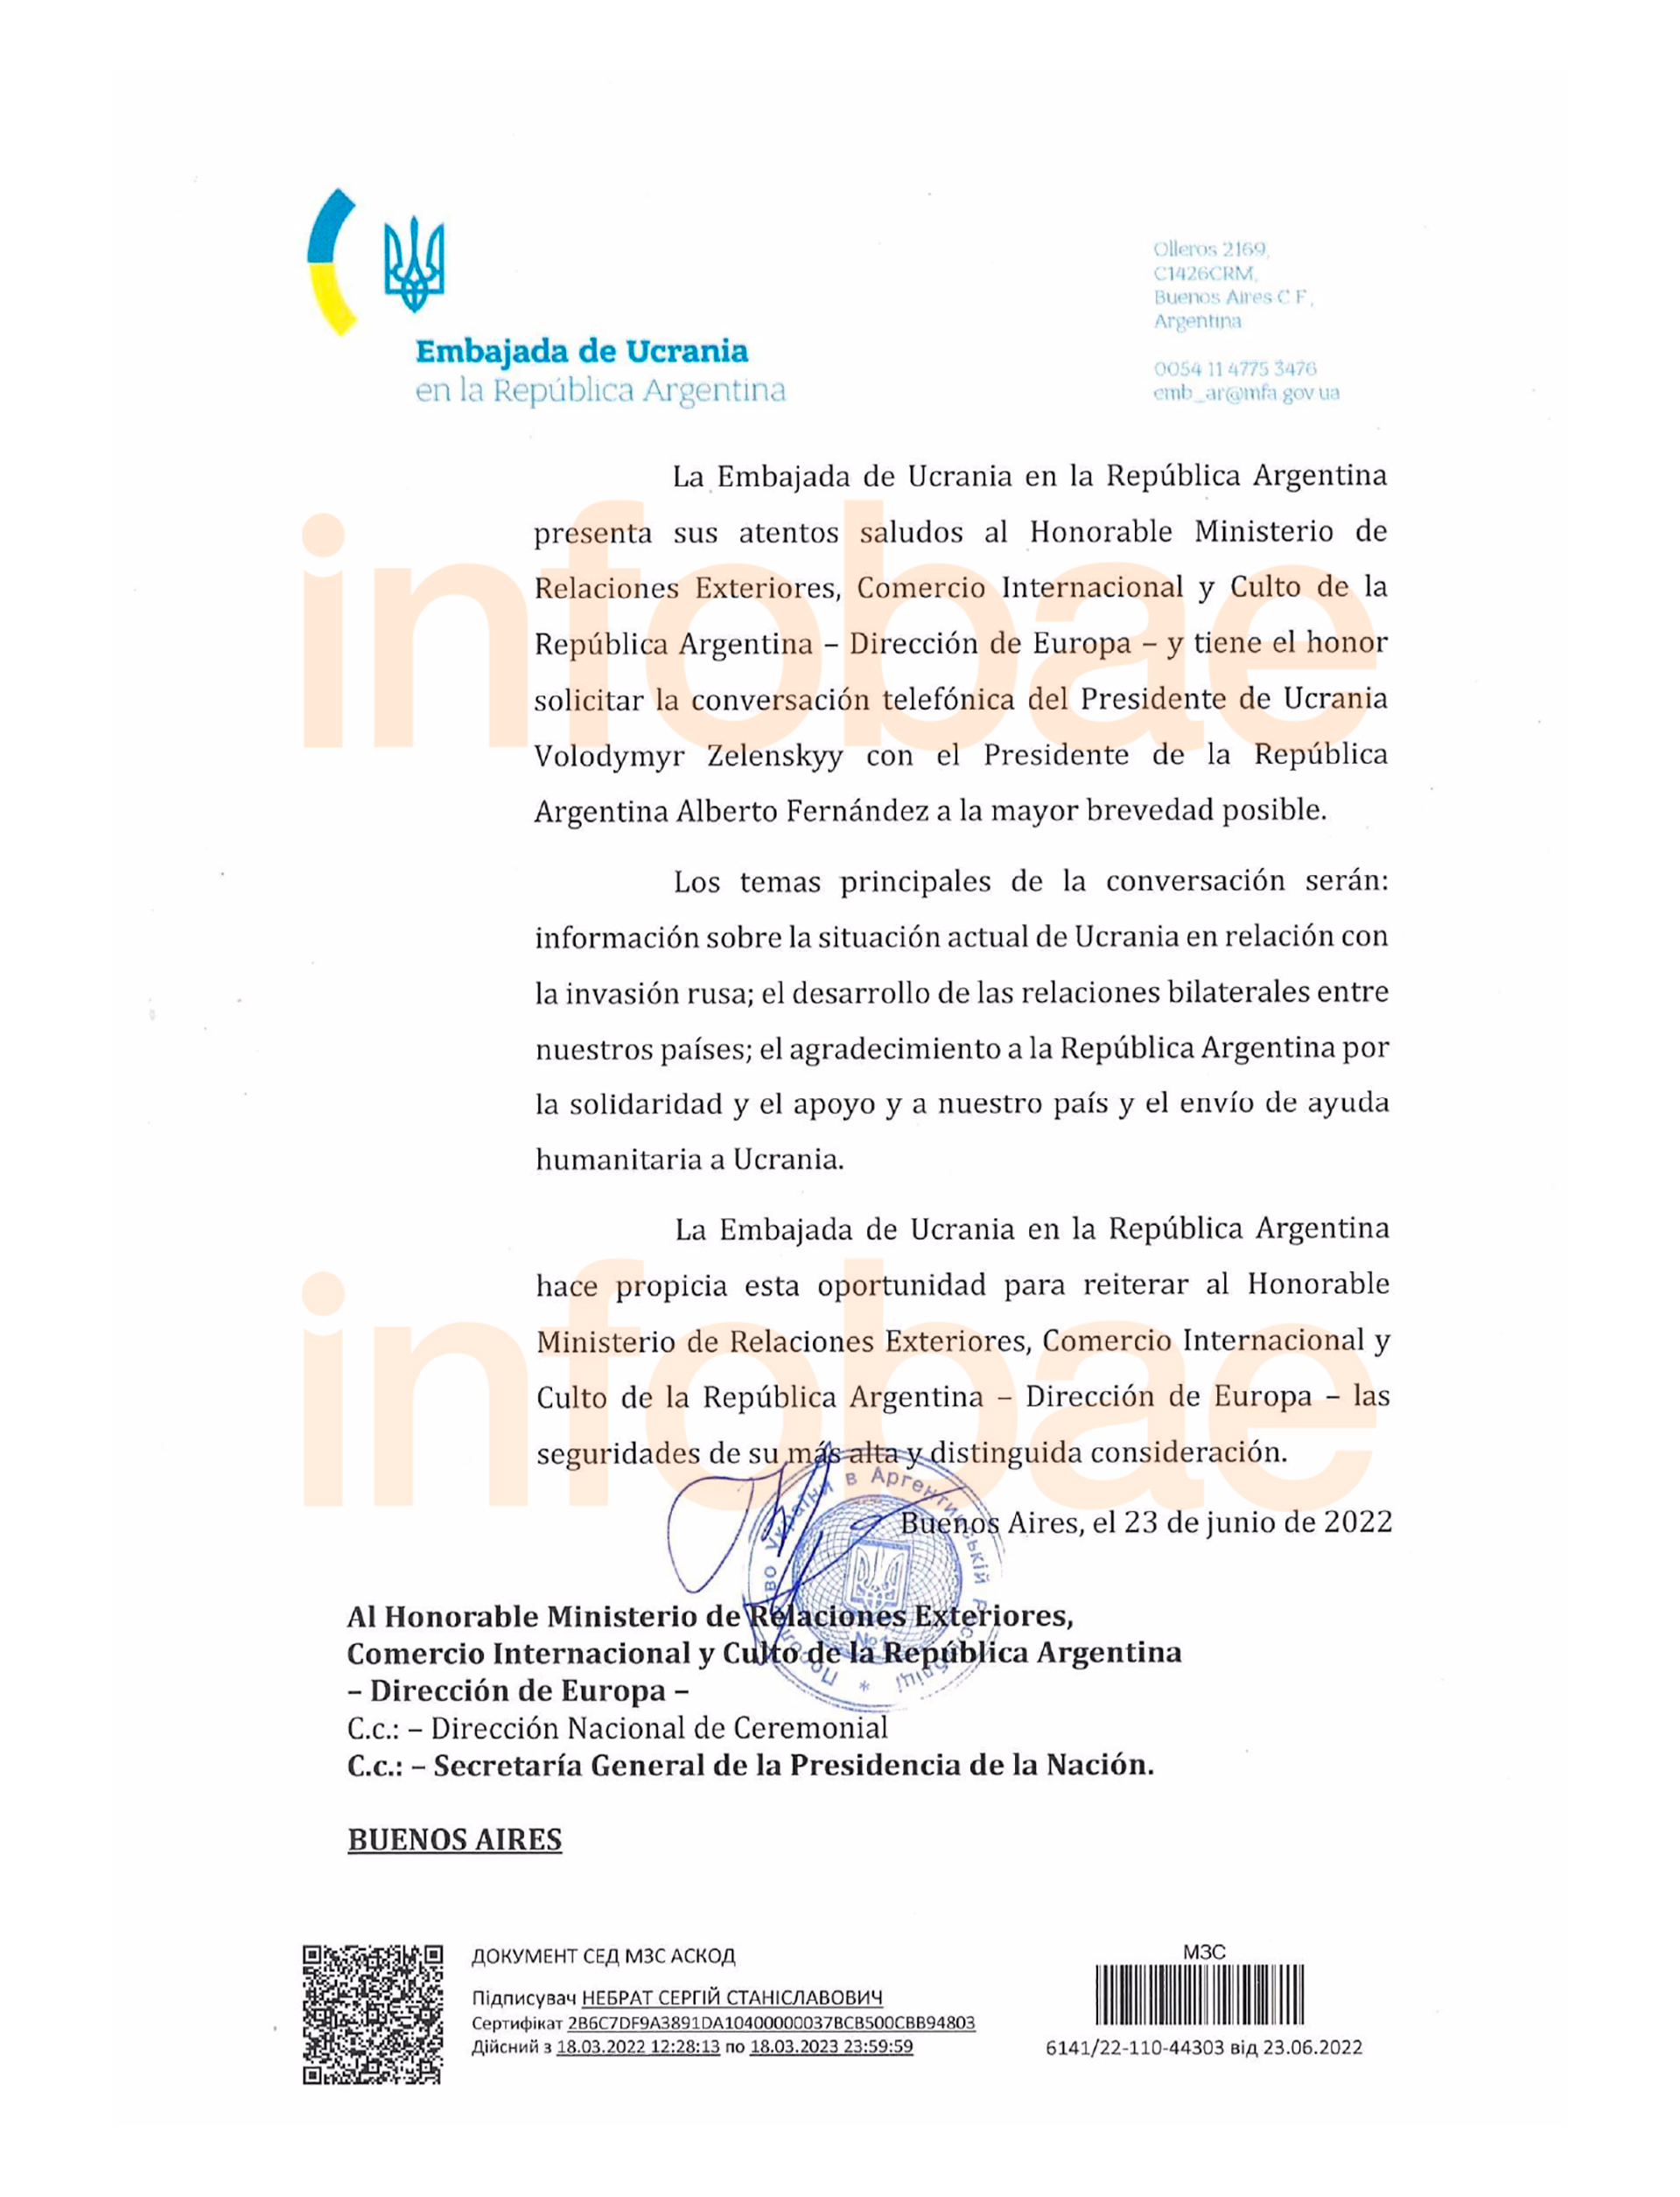 La carta enviada por la Embajada de Ucrania en Argentina